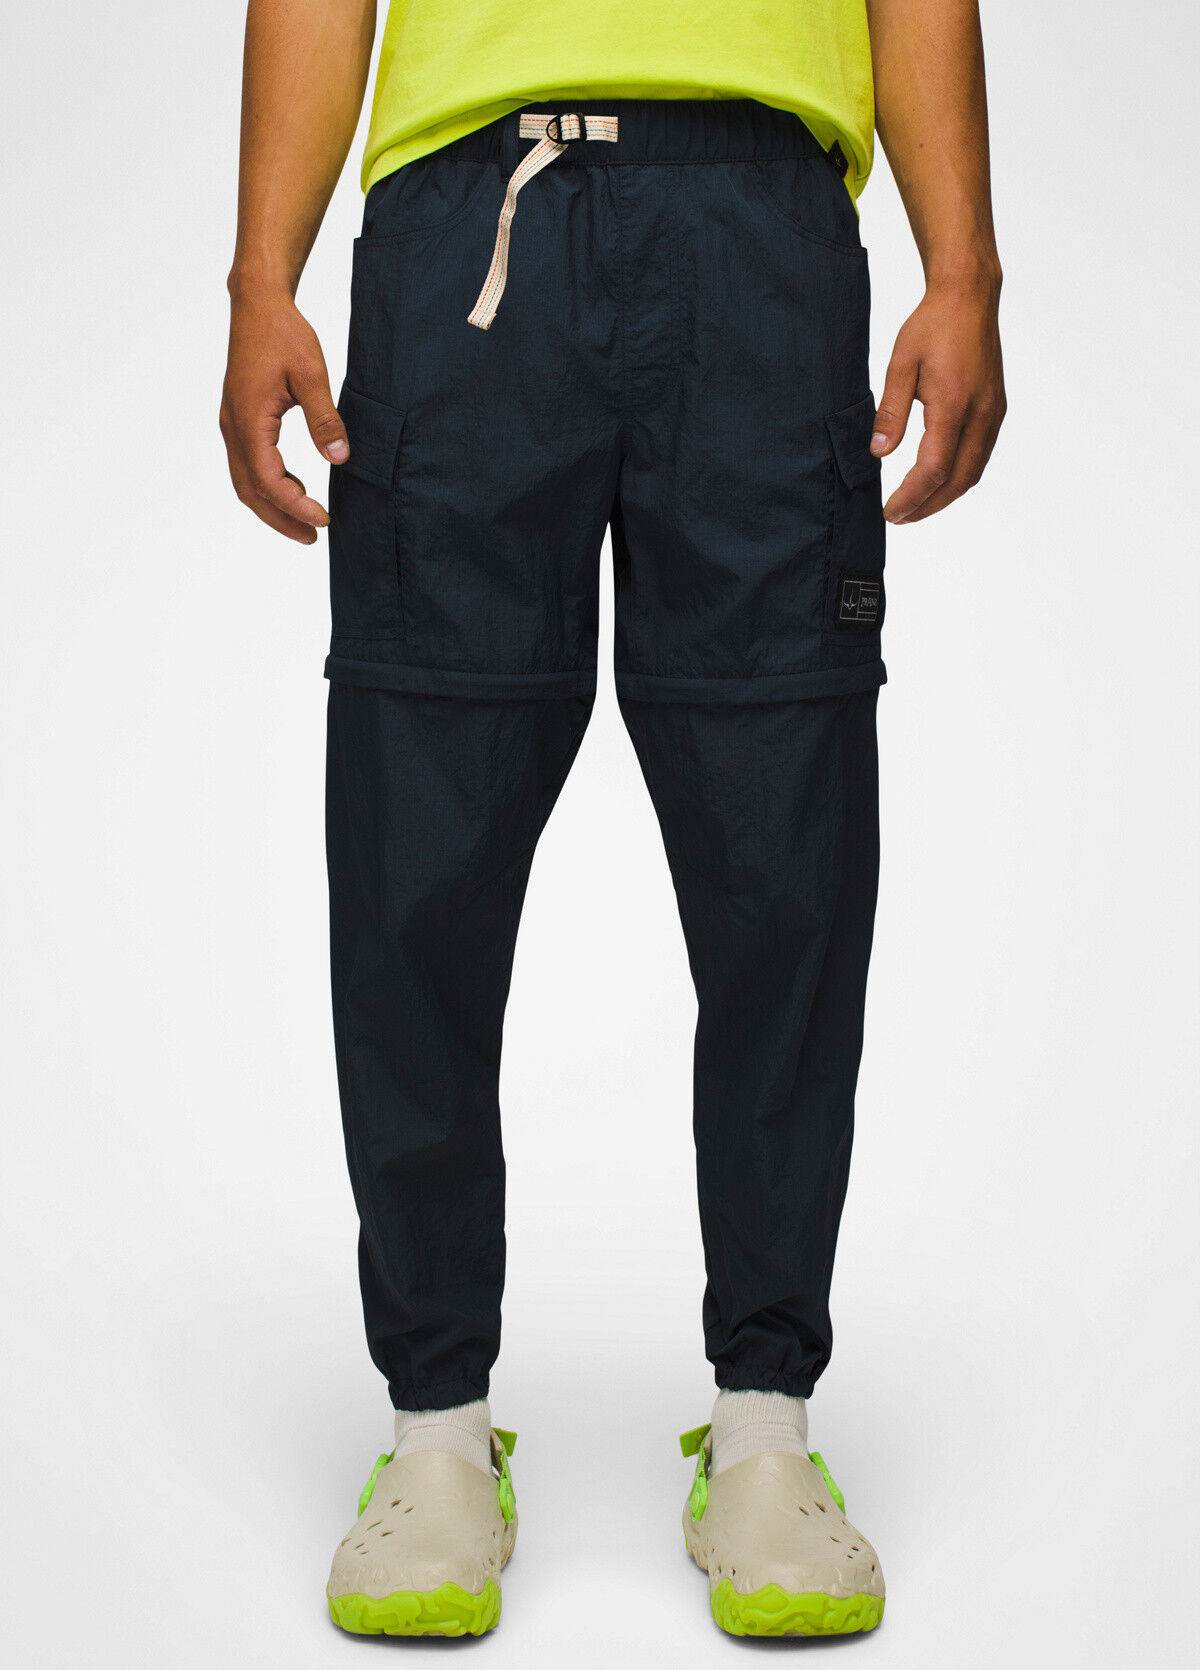 Prana Connector Convertible Pant - Convertible hiking trousers - Men's | Hardloop